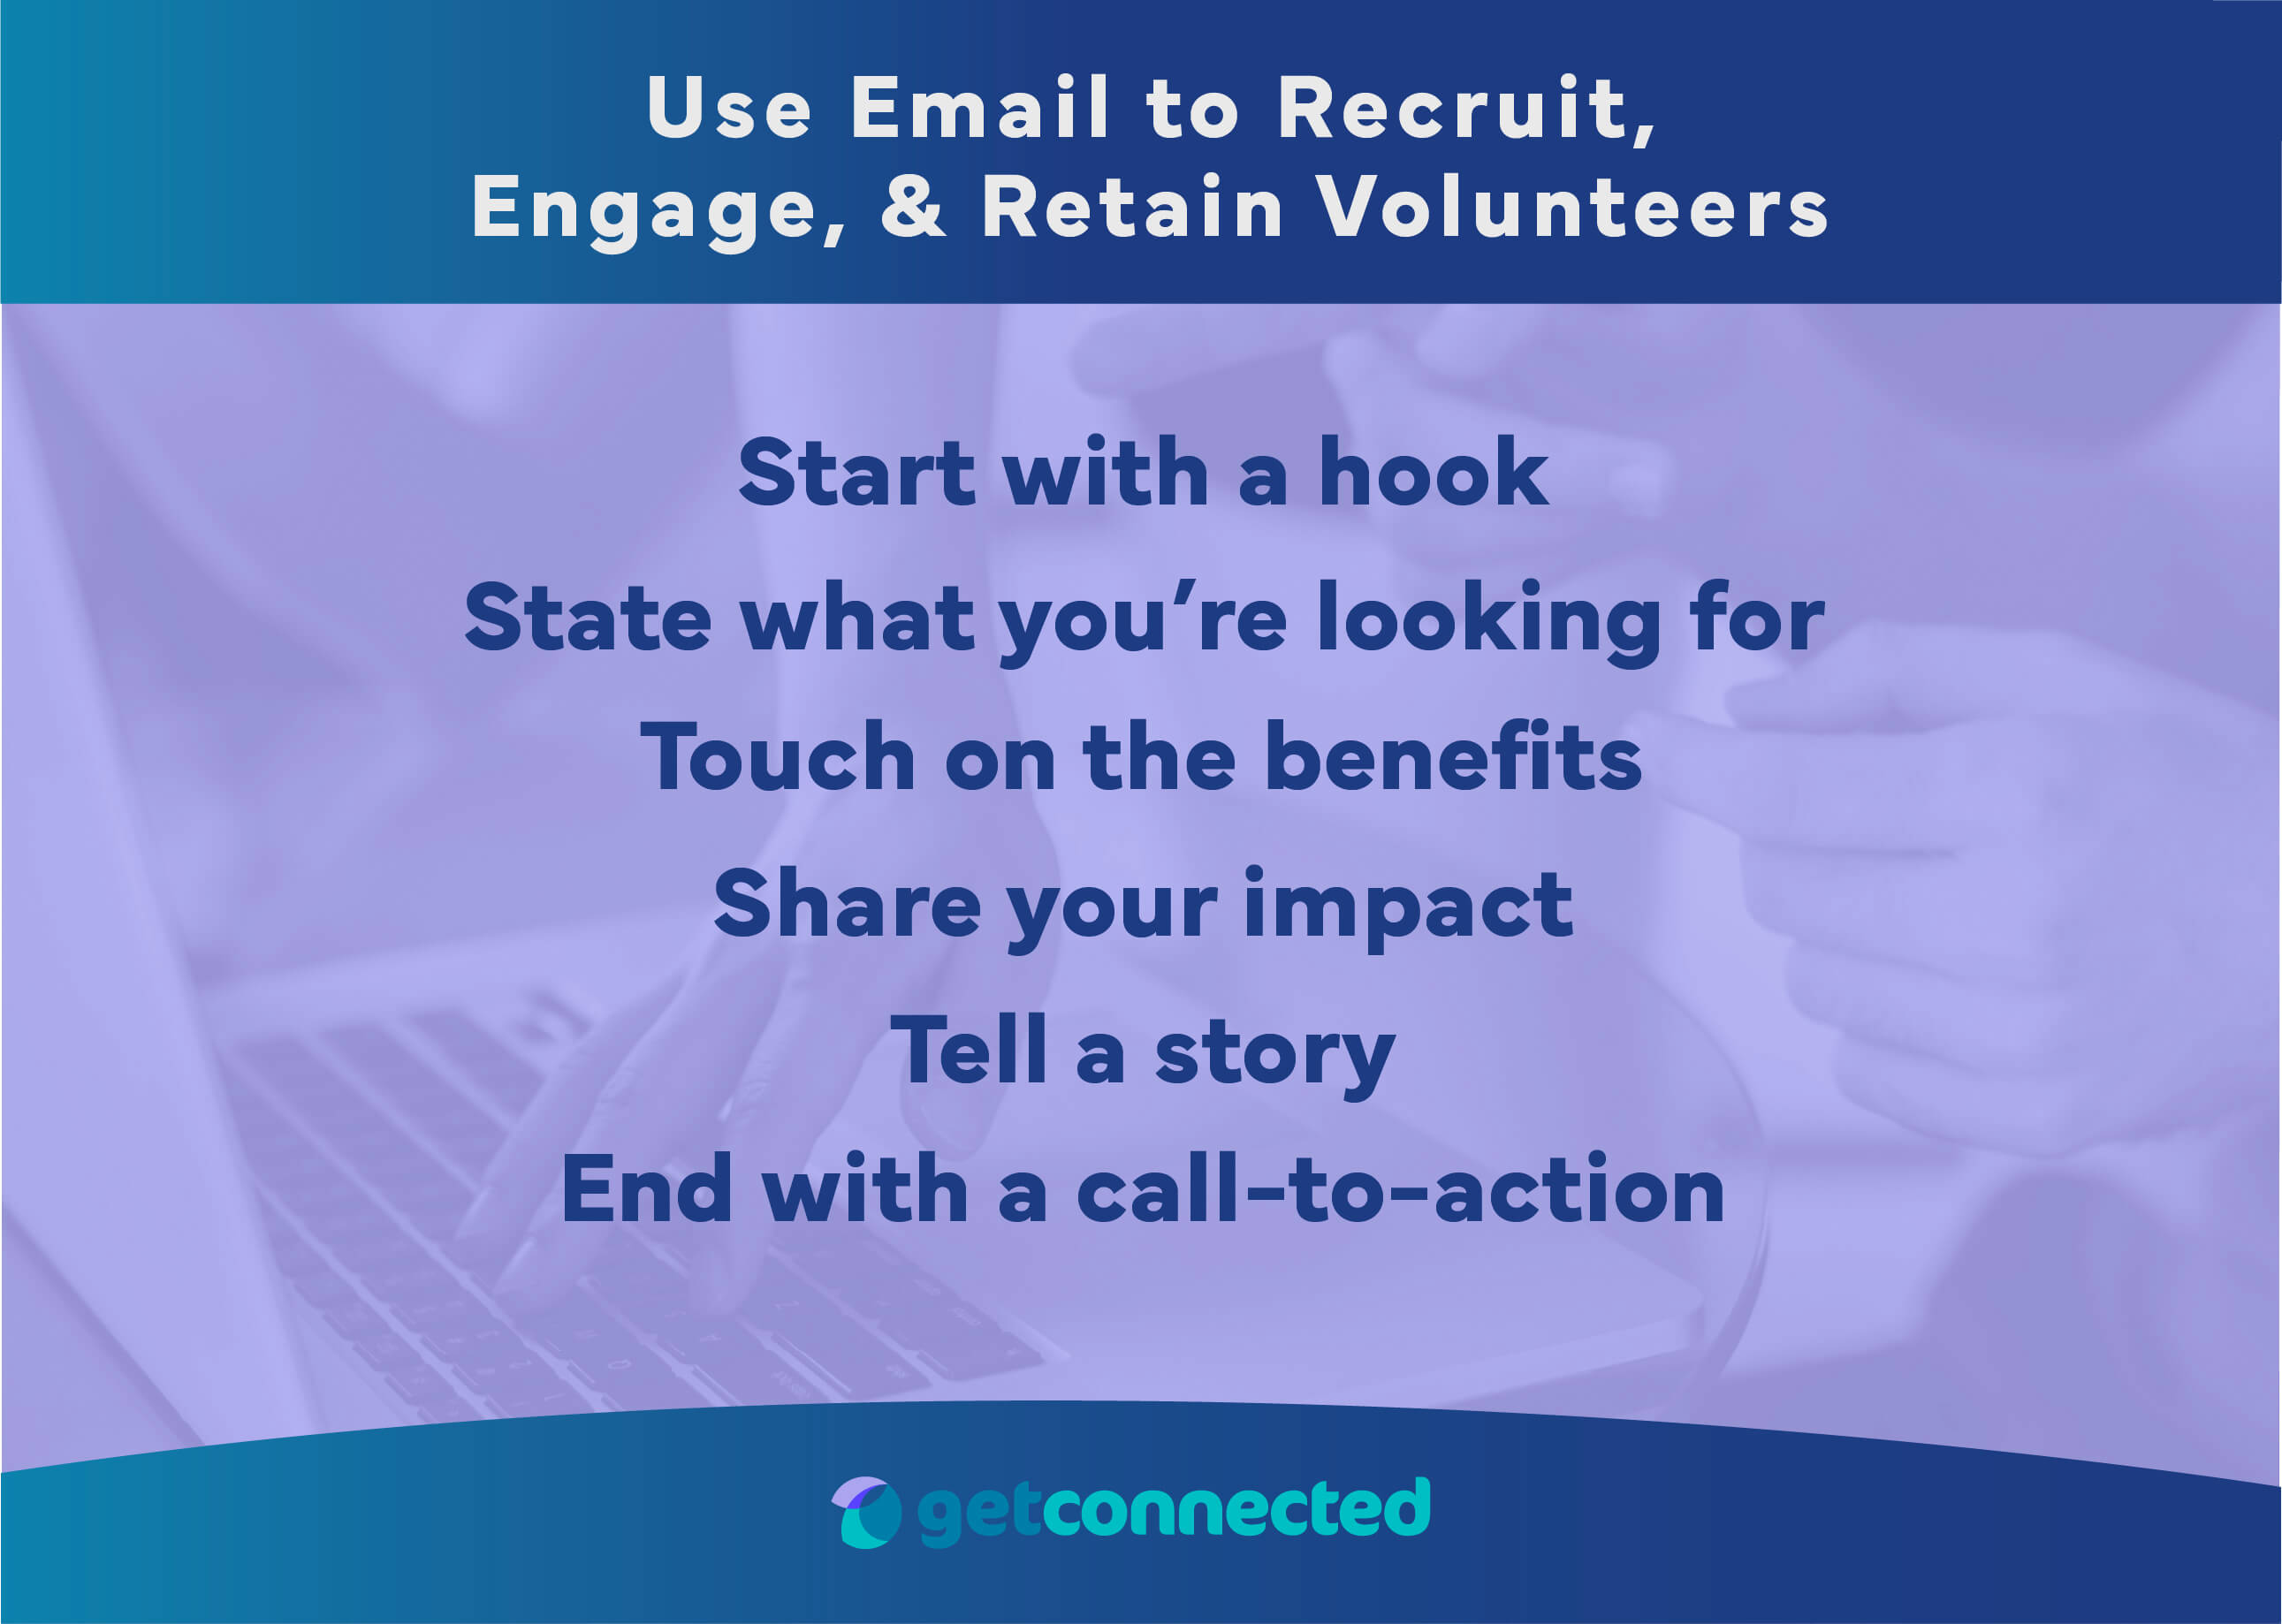 Volunteer recruitment email strategies to engage and retain volunteers